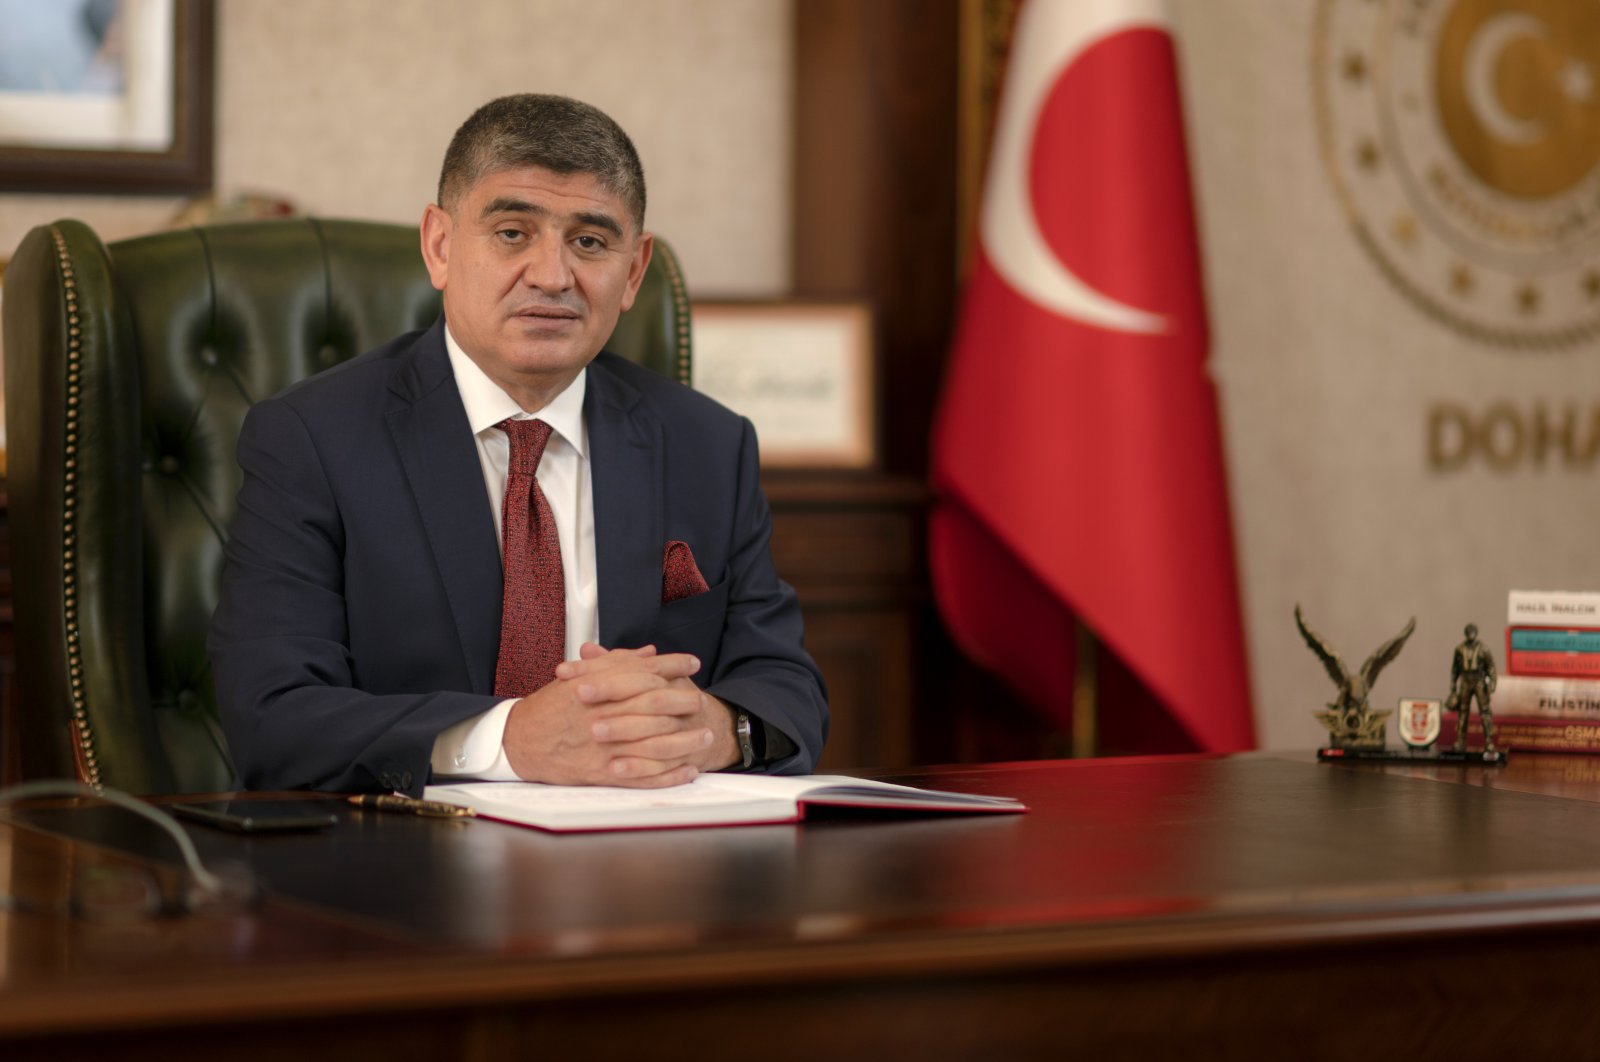 Kesepakatan baru untuk lebih memperkuat hubungan Turki-Qatar: utusan Turki